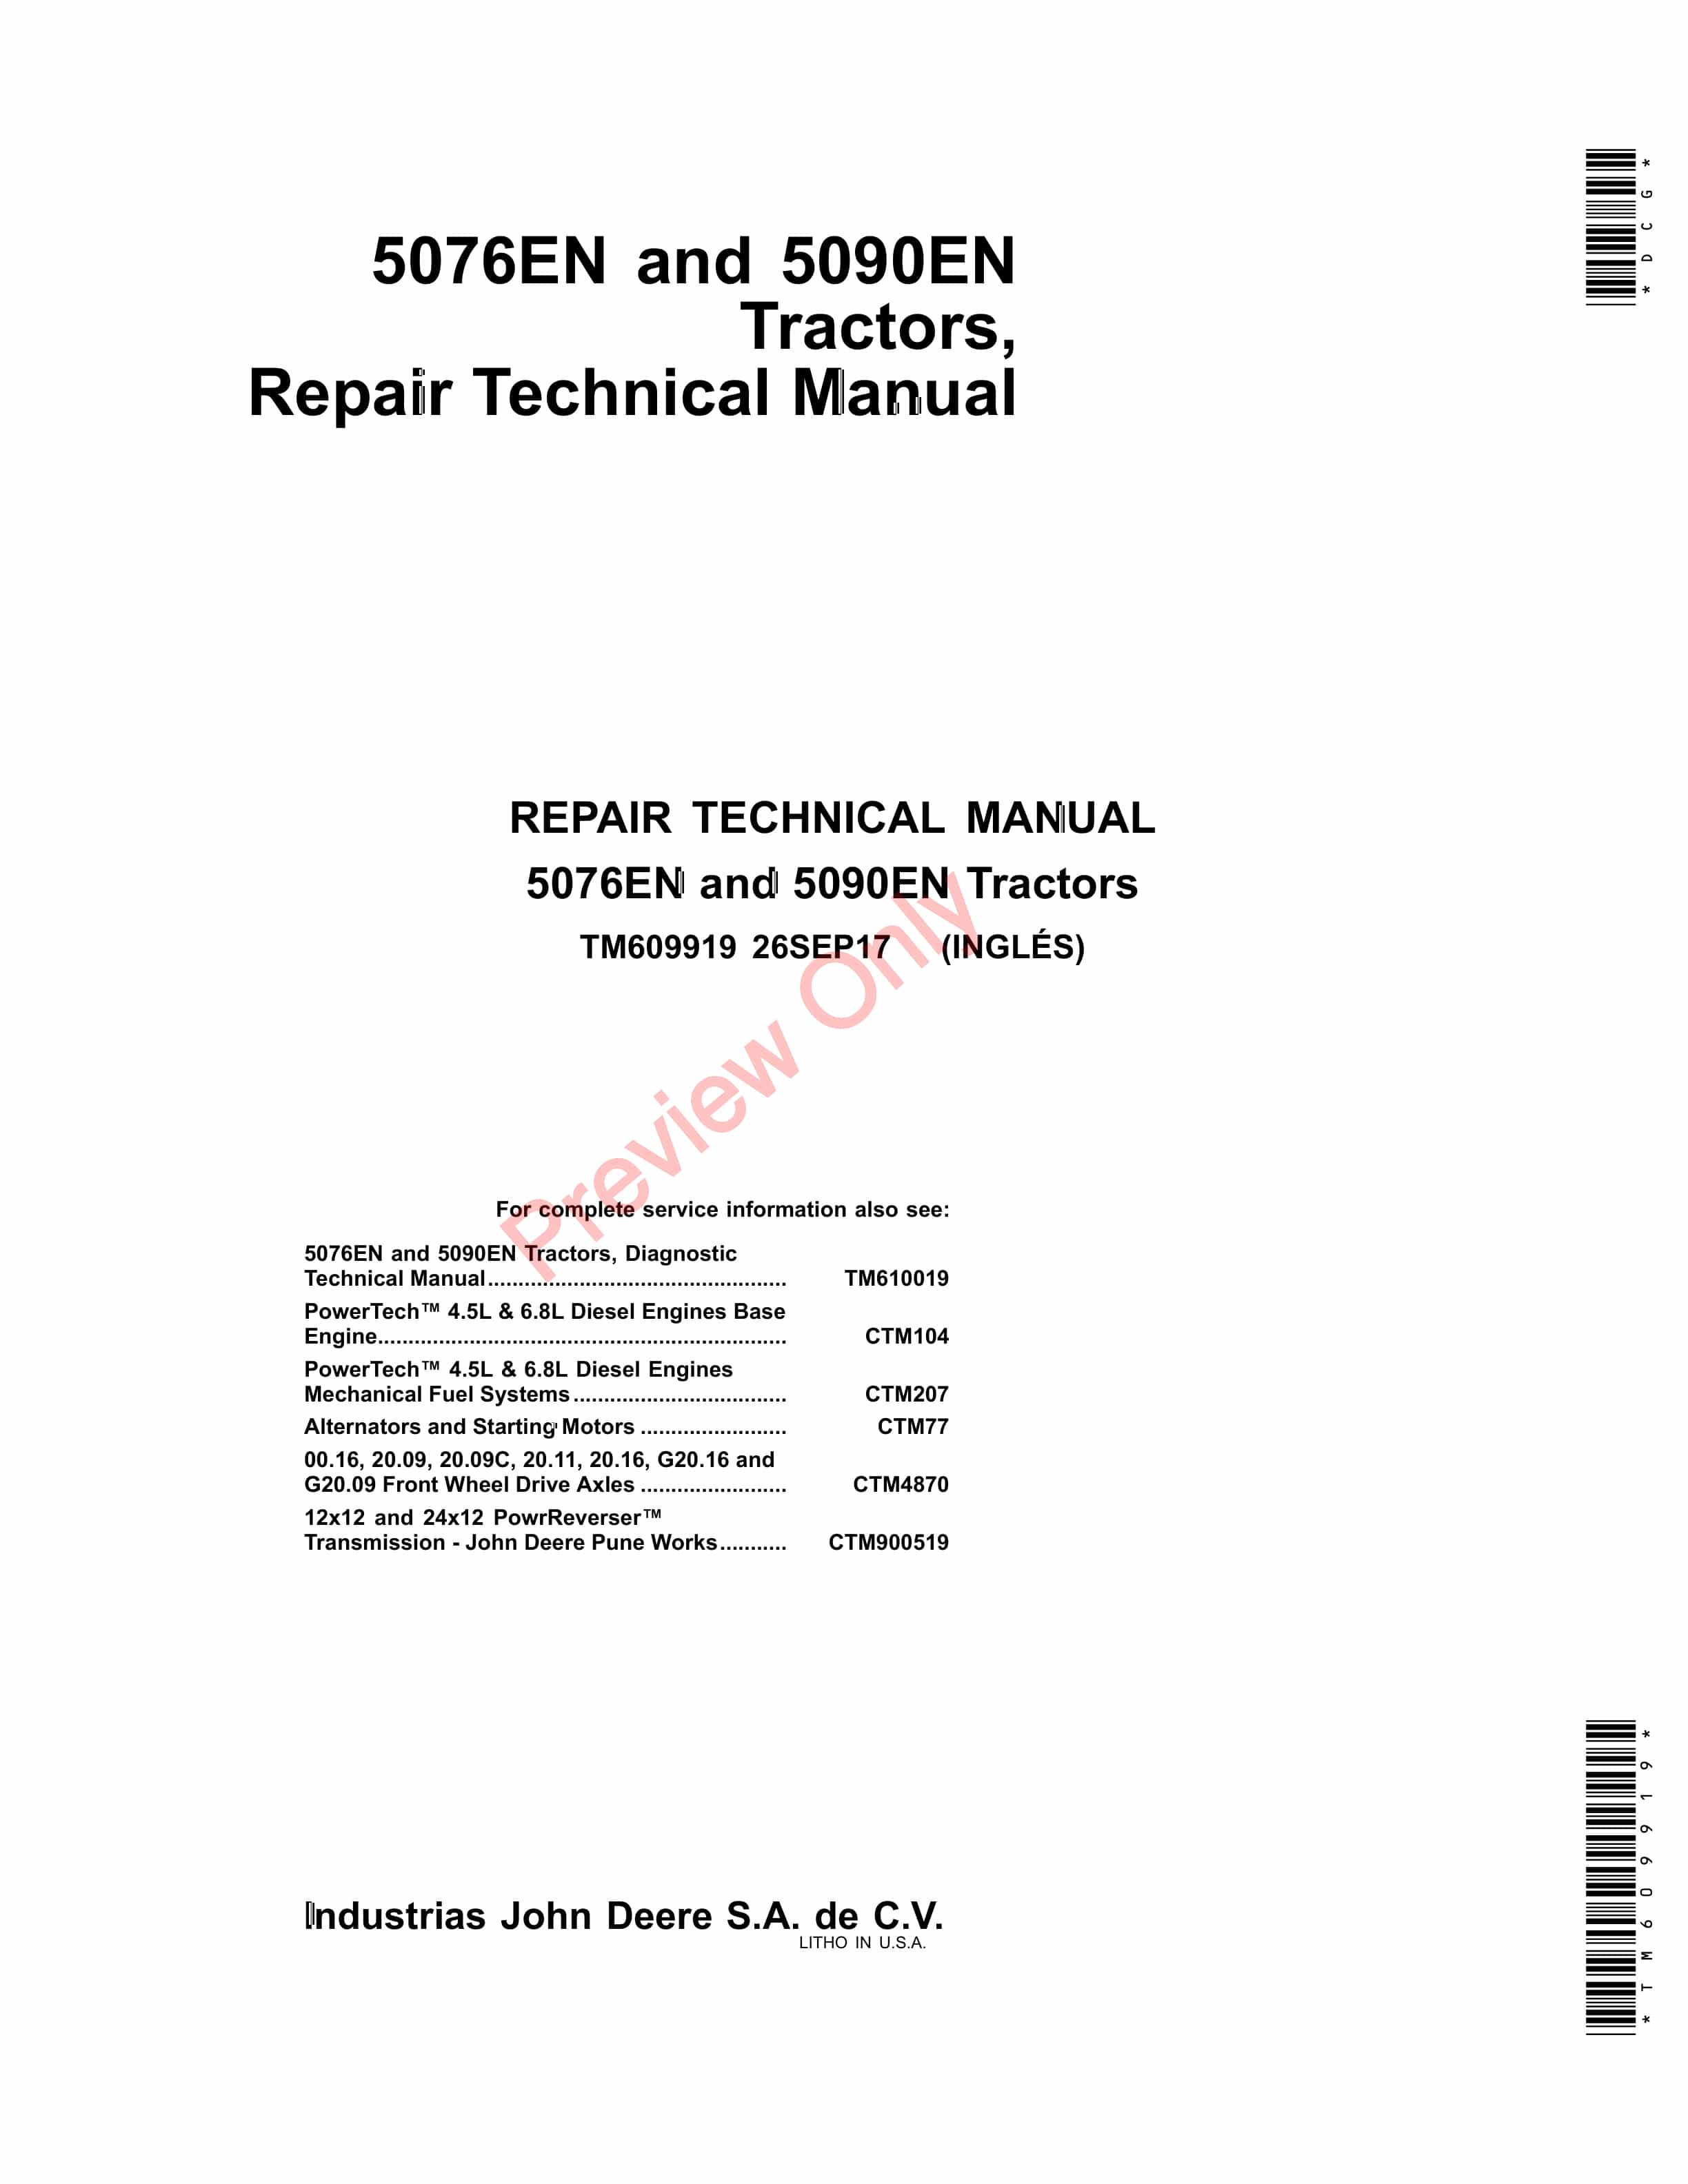 John Deere 5076EN and 5090EN Tractors Repair Technical Manual TM609919 26SEP17 1